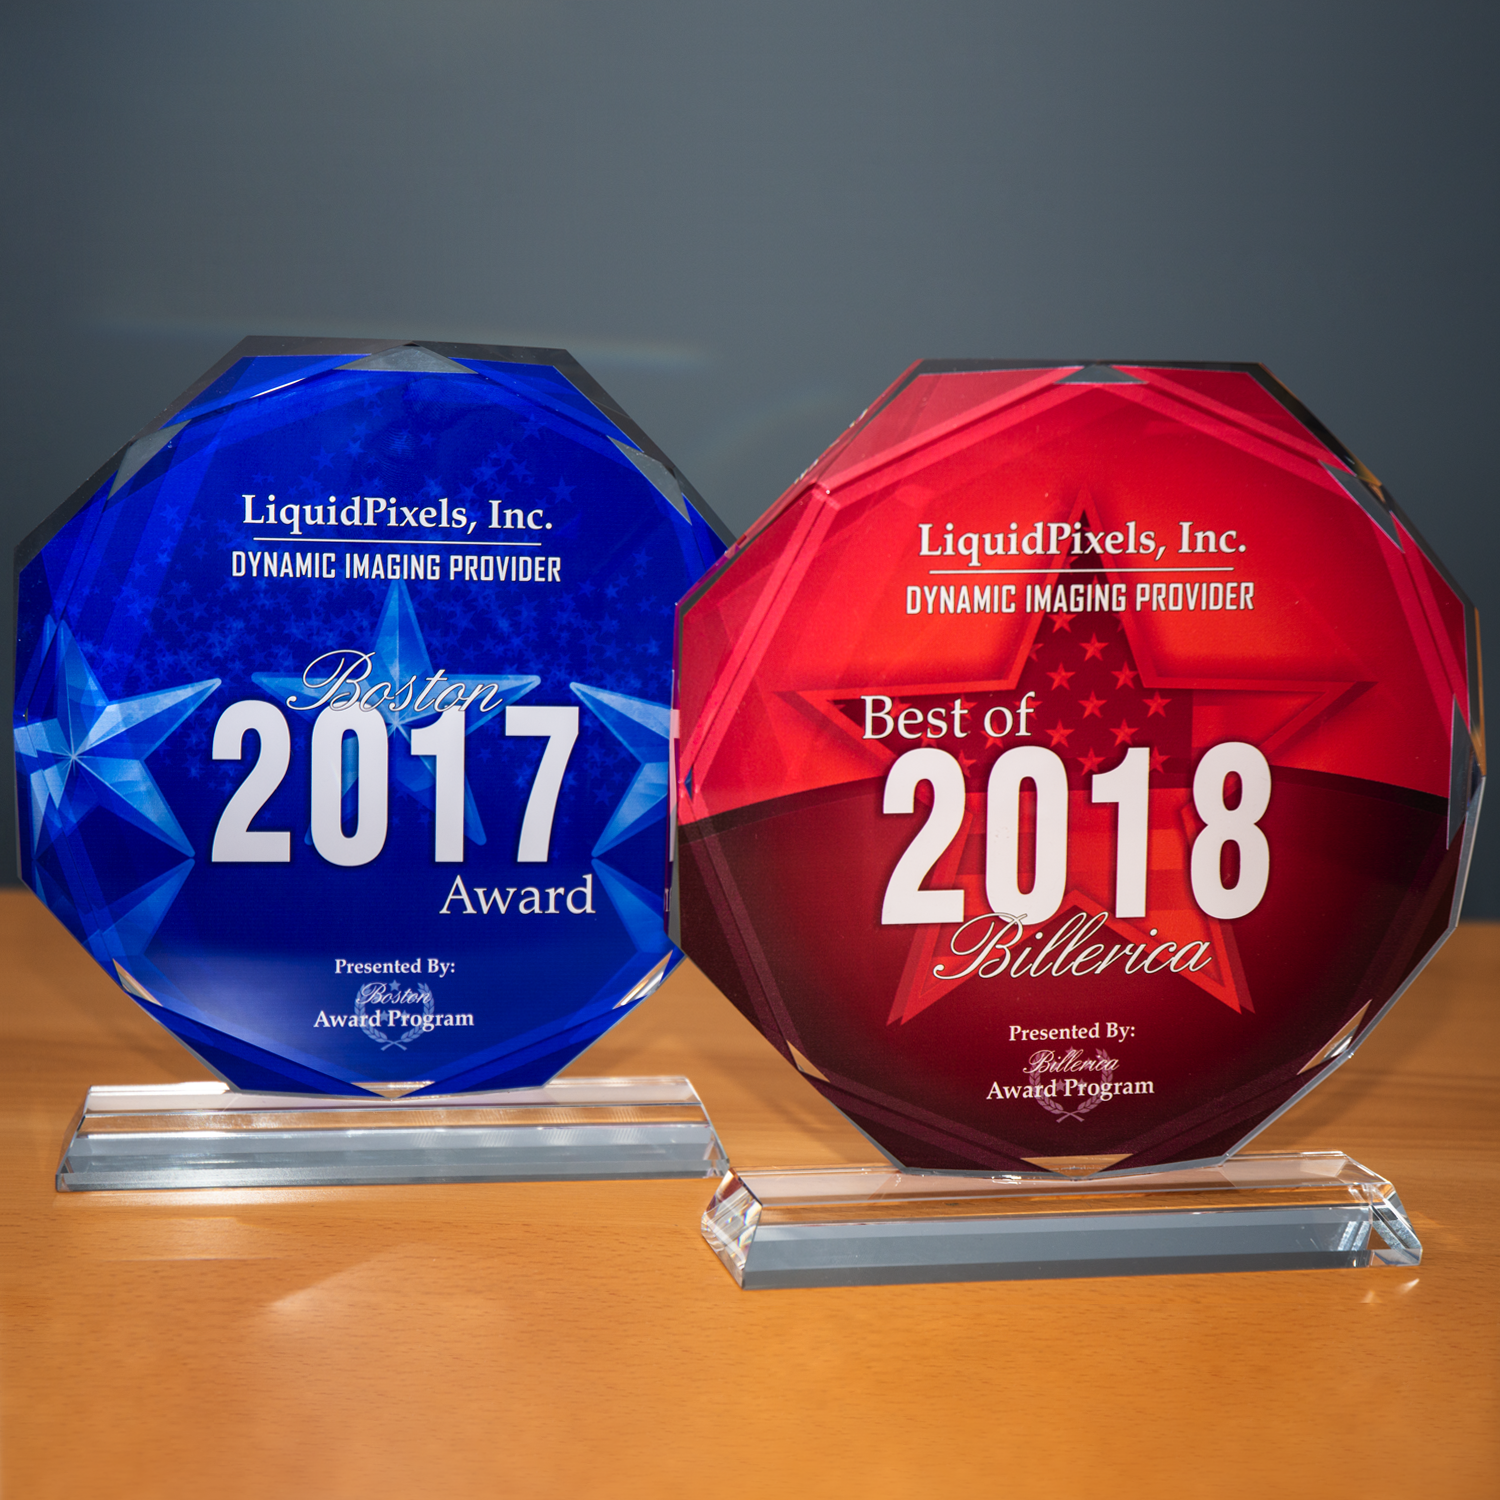 LiquidPixels Best of Boston 2018